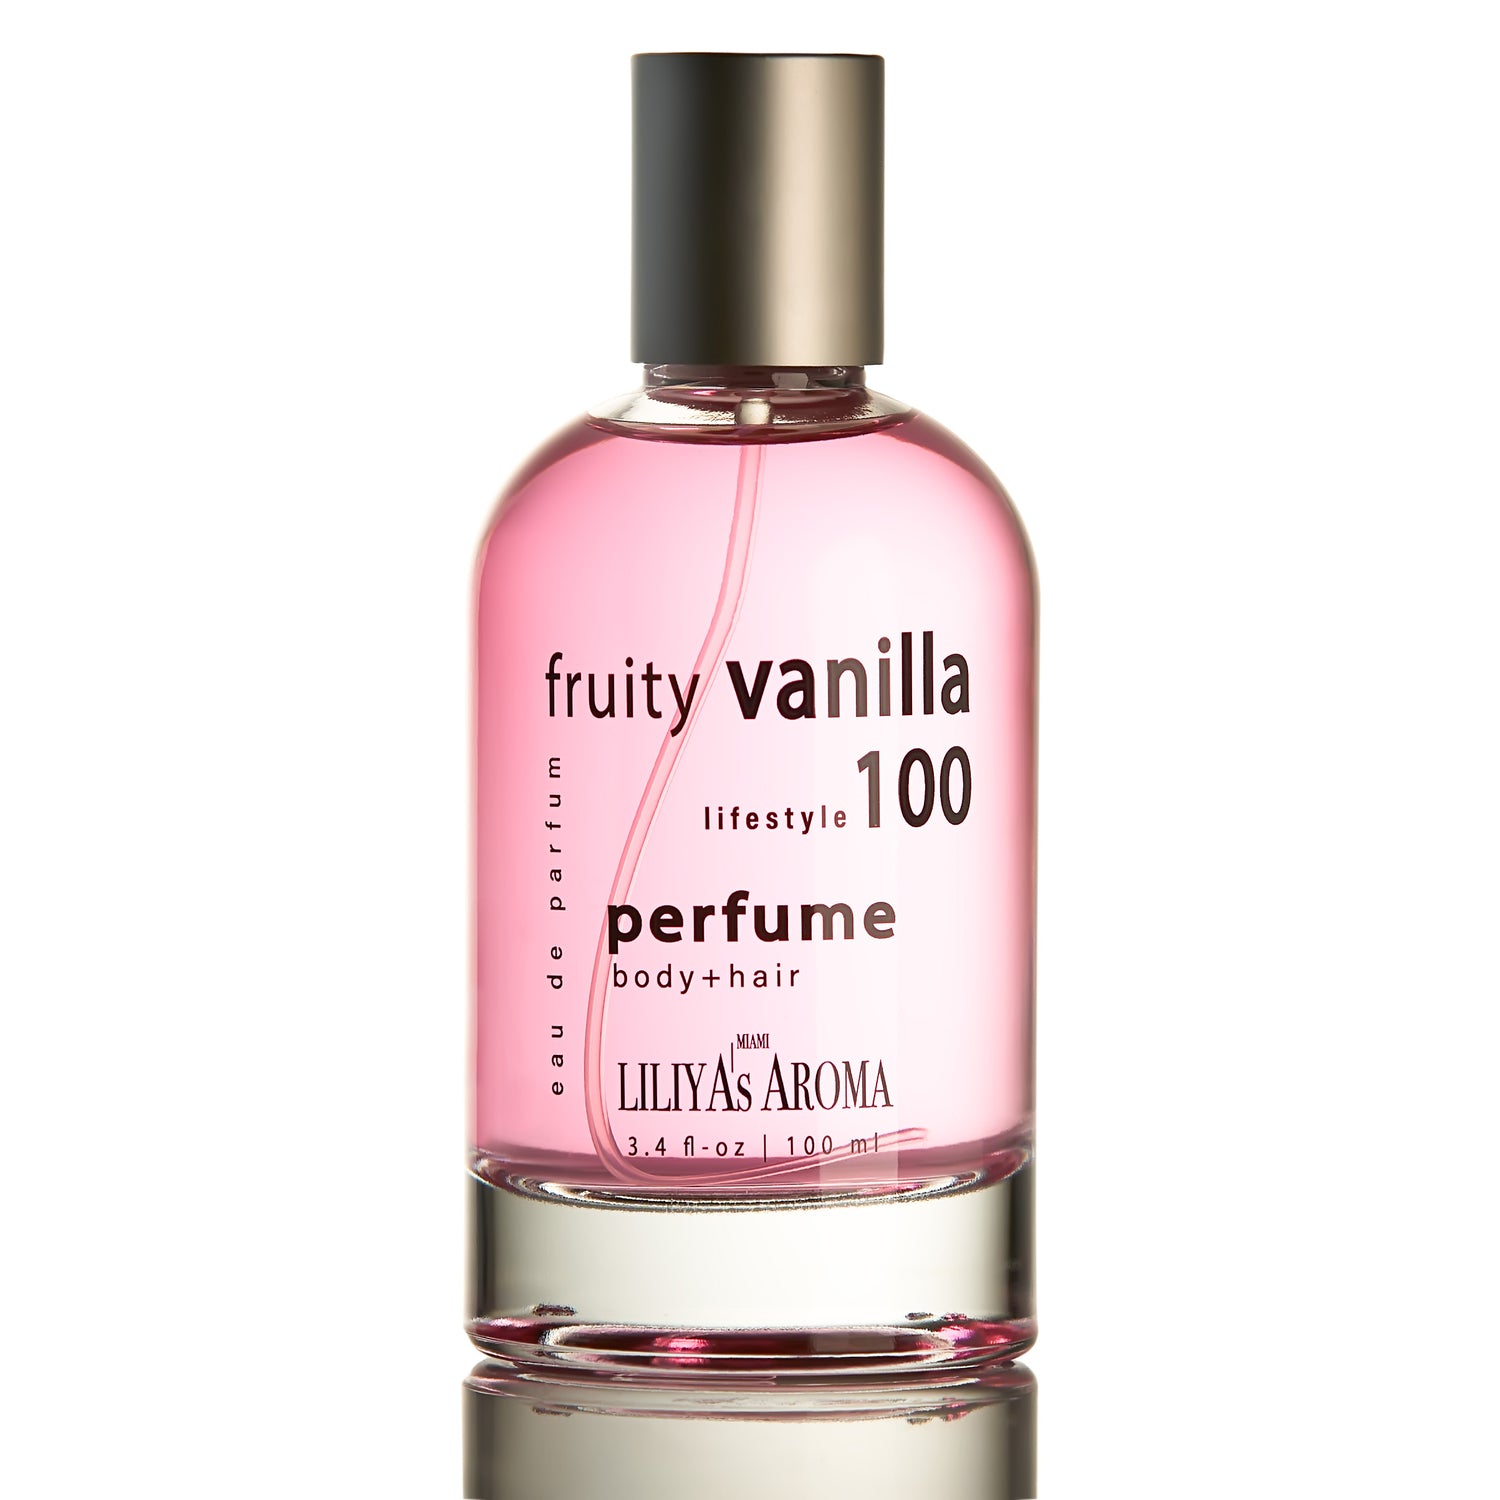 Liliya's Aroma Fruity Vanilla 100, Eau de Parfum